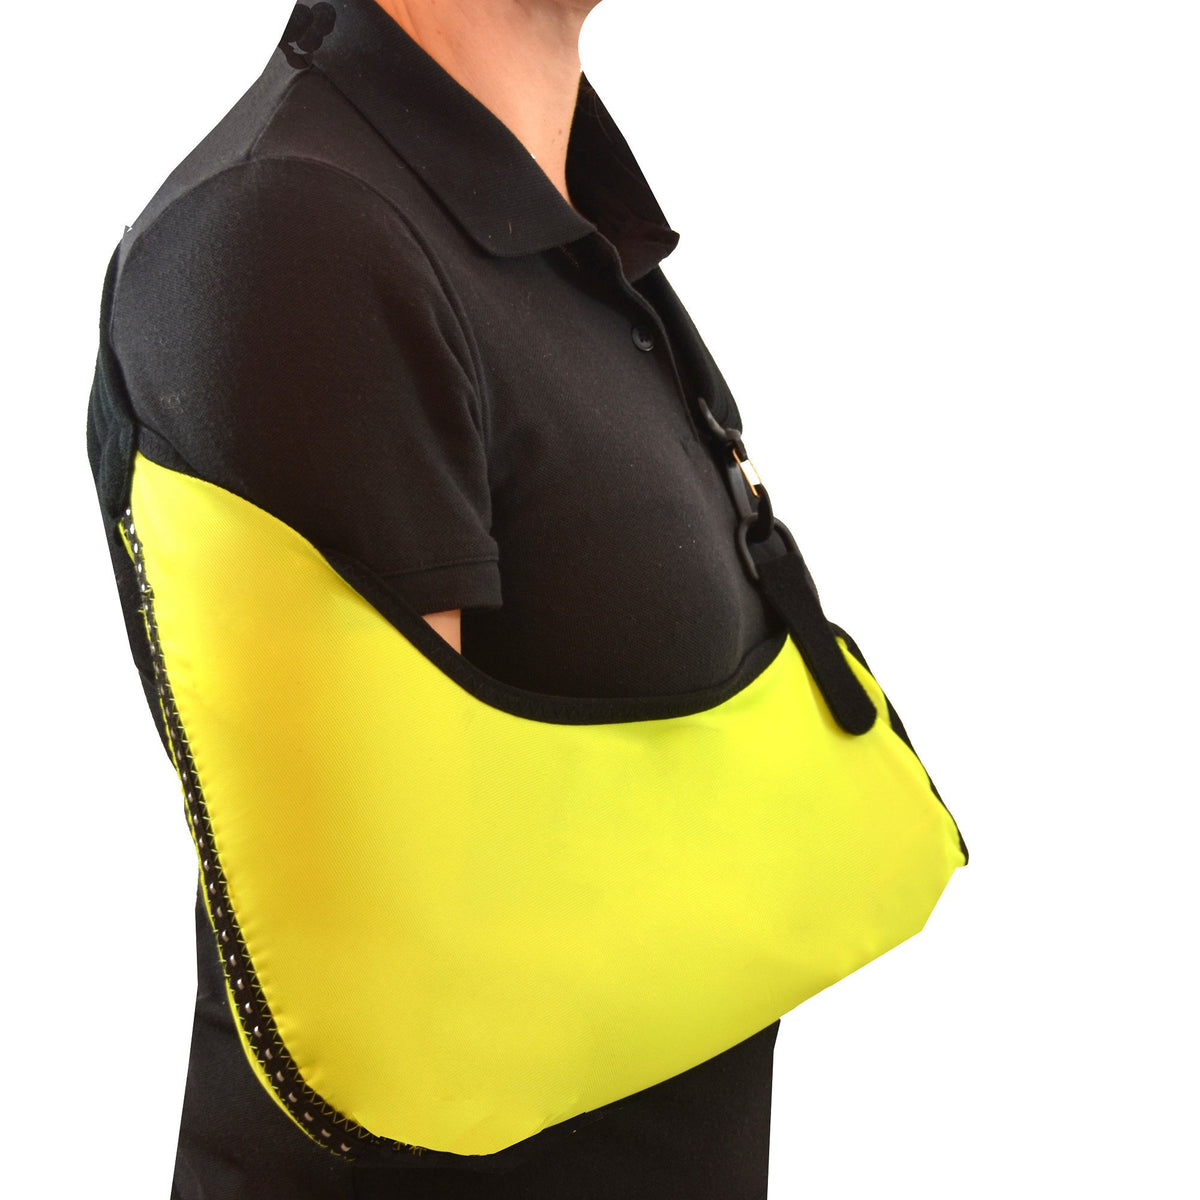  PLEXFIT Athletic Arm Sling (Medium Left, Yellow